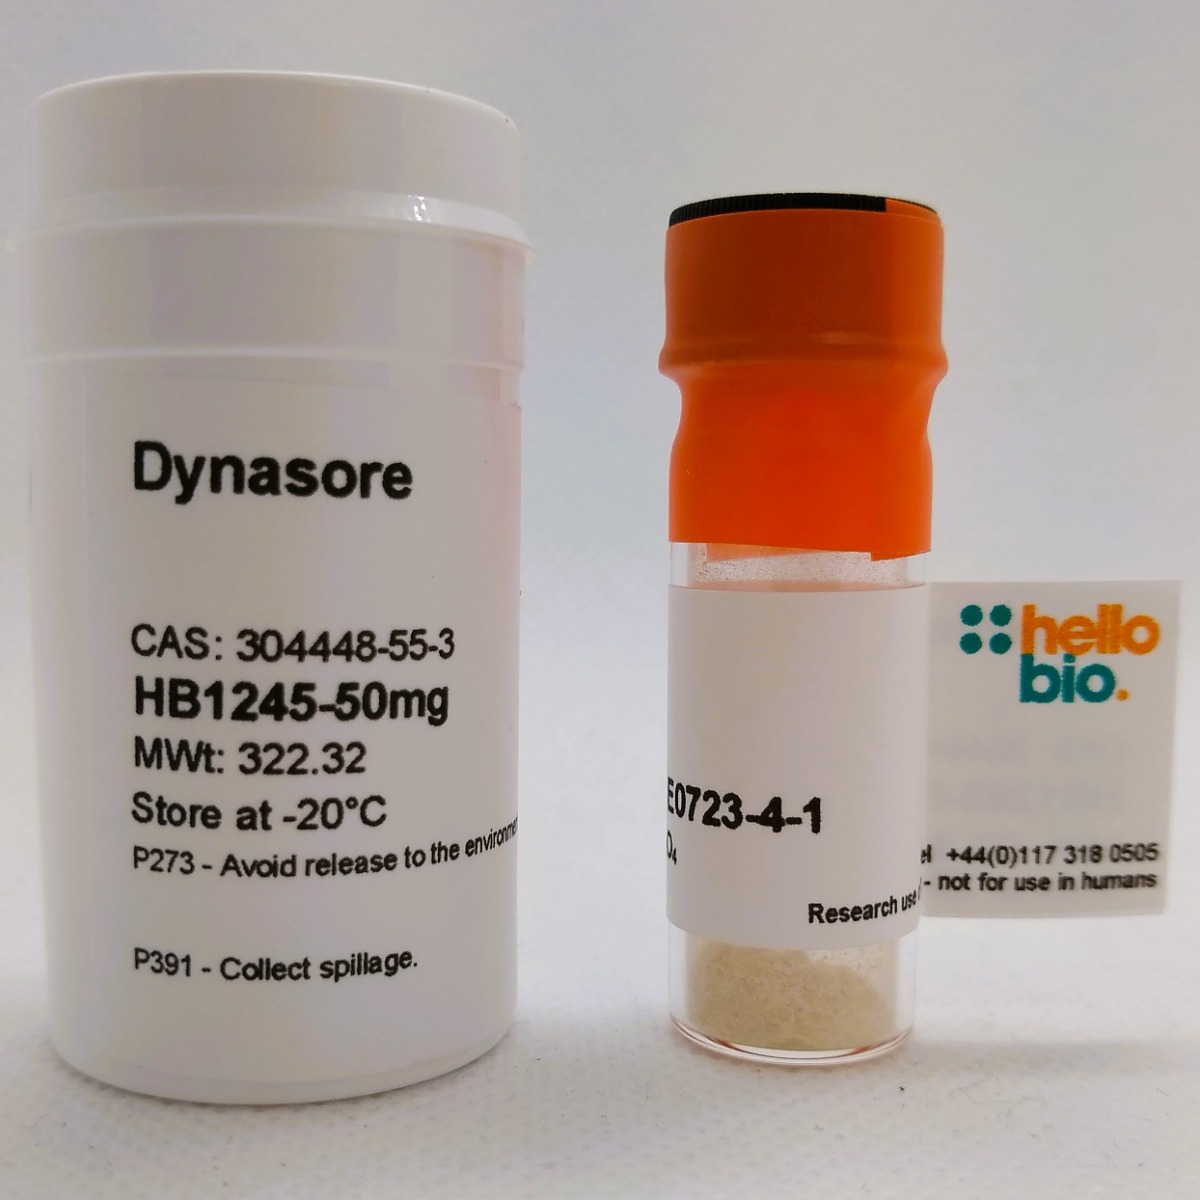 Dynasore product vial image | Hello Bio